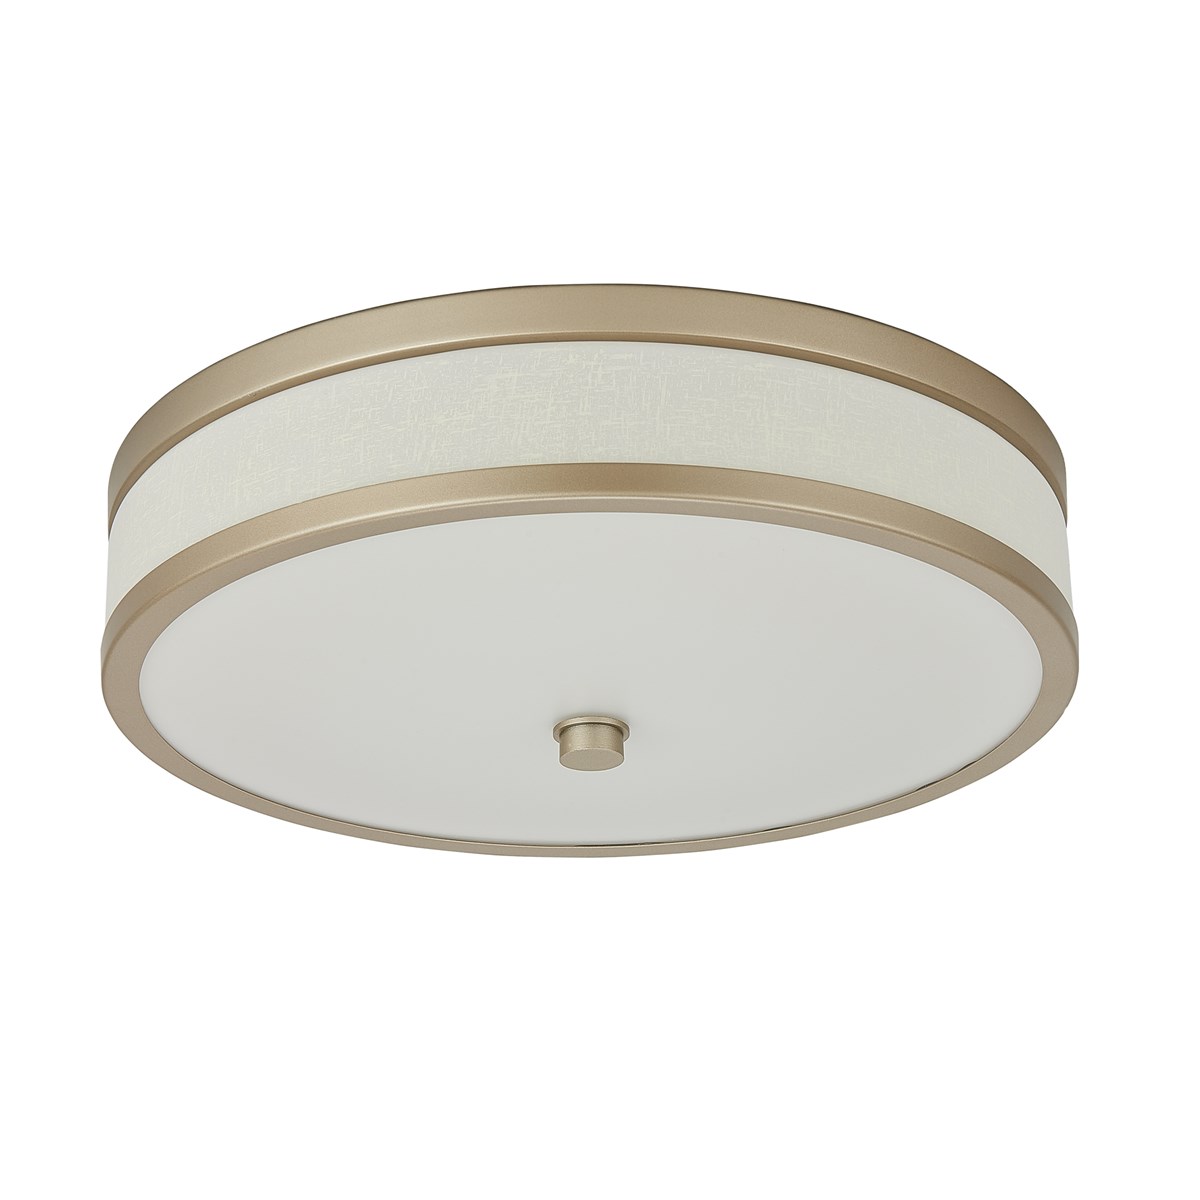 LED flush mount ceiling light fixture modern light fixtureceiling lamp for hallwaykitchen bedroom bathroom ETL li